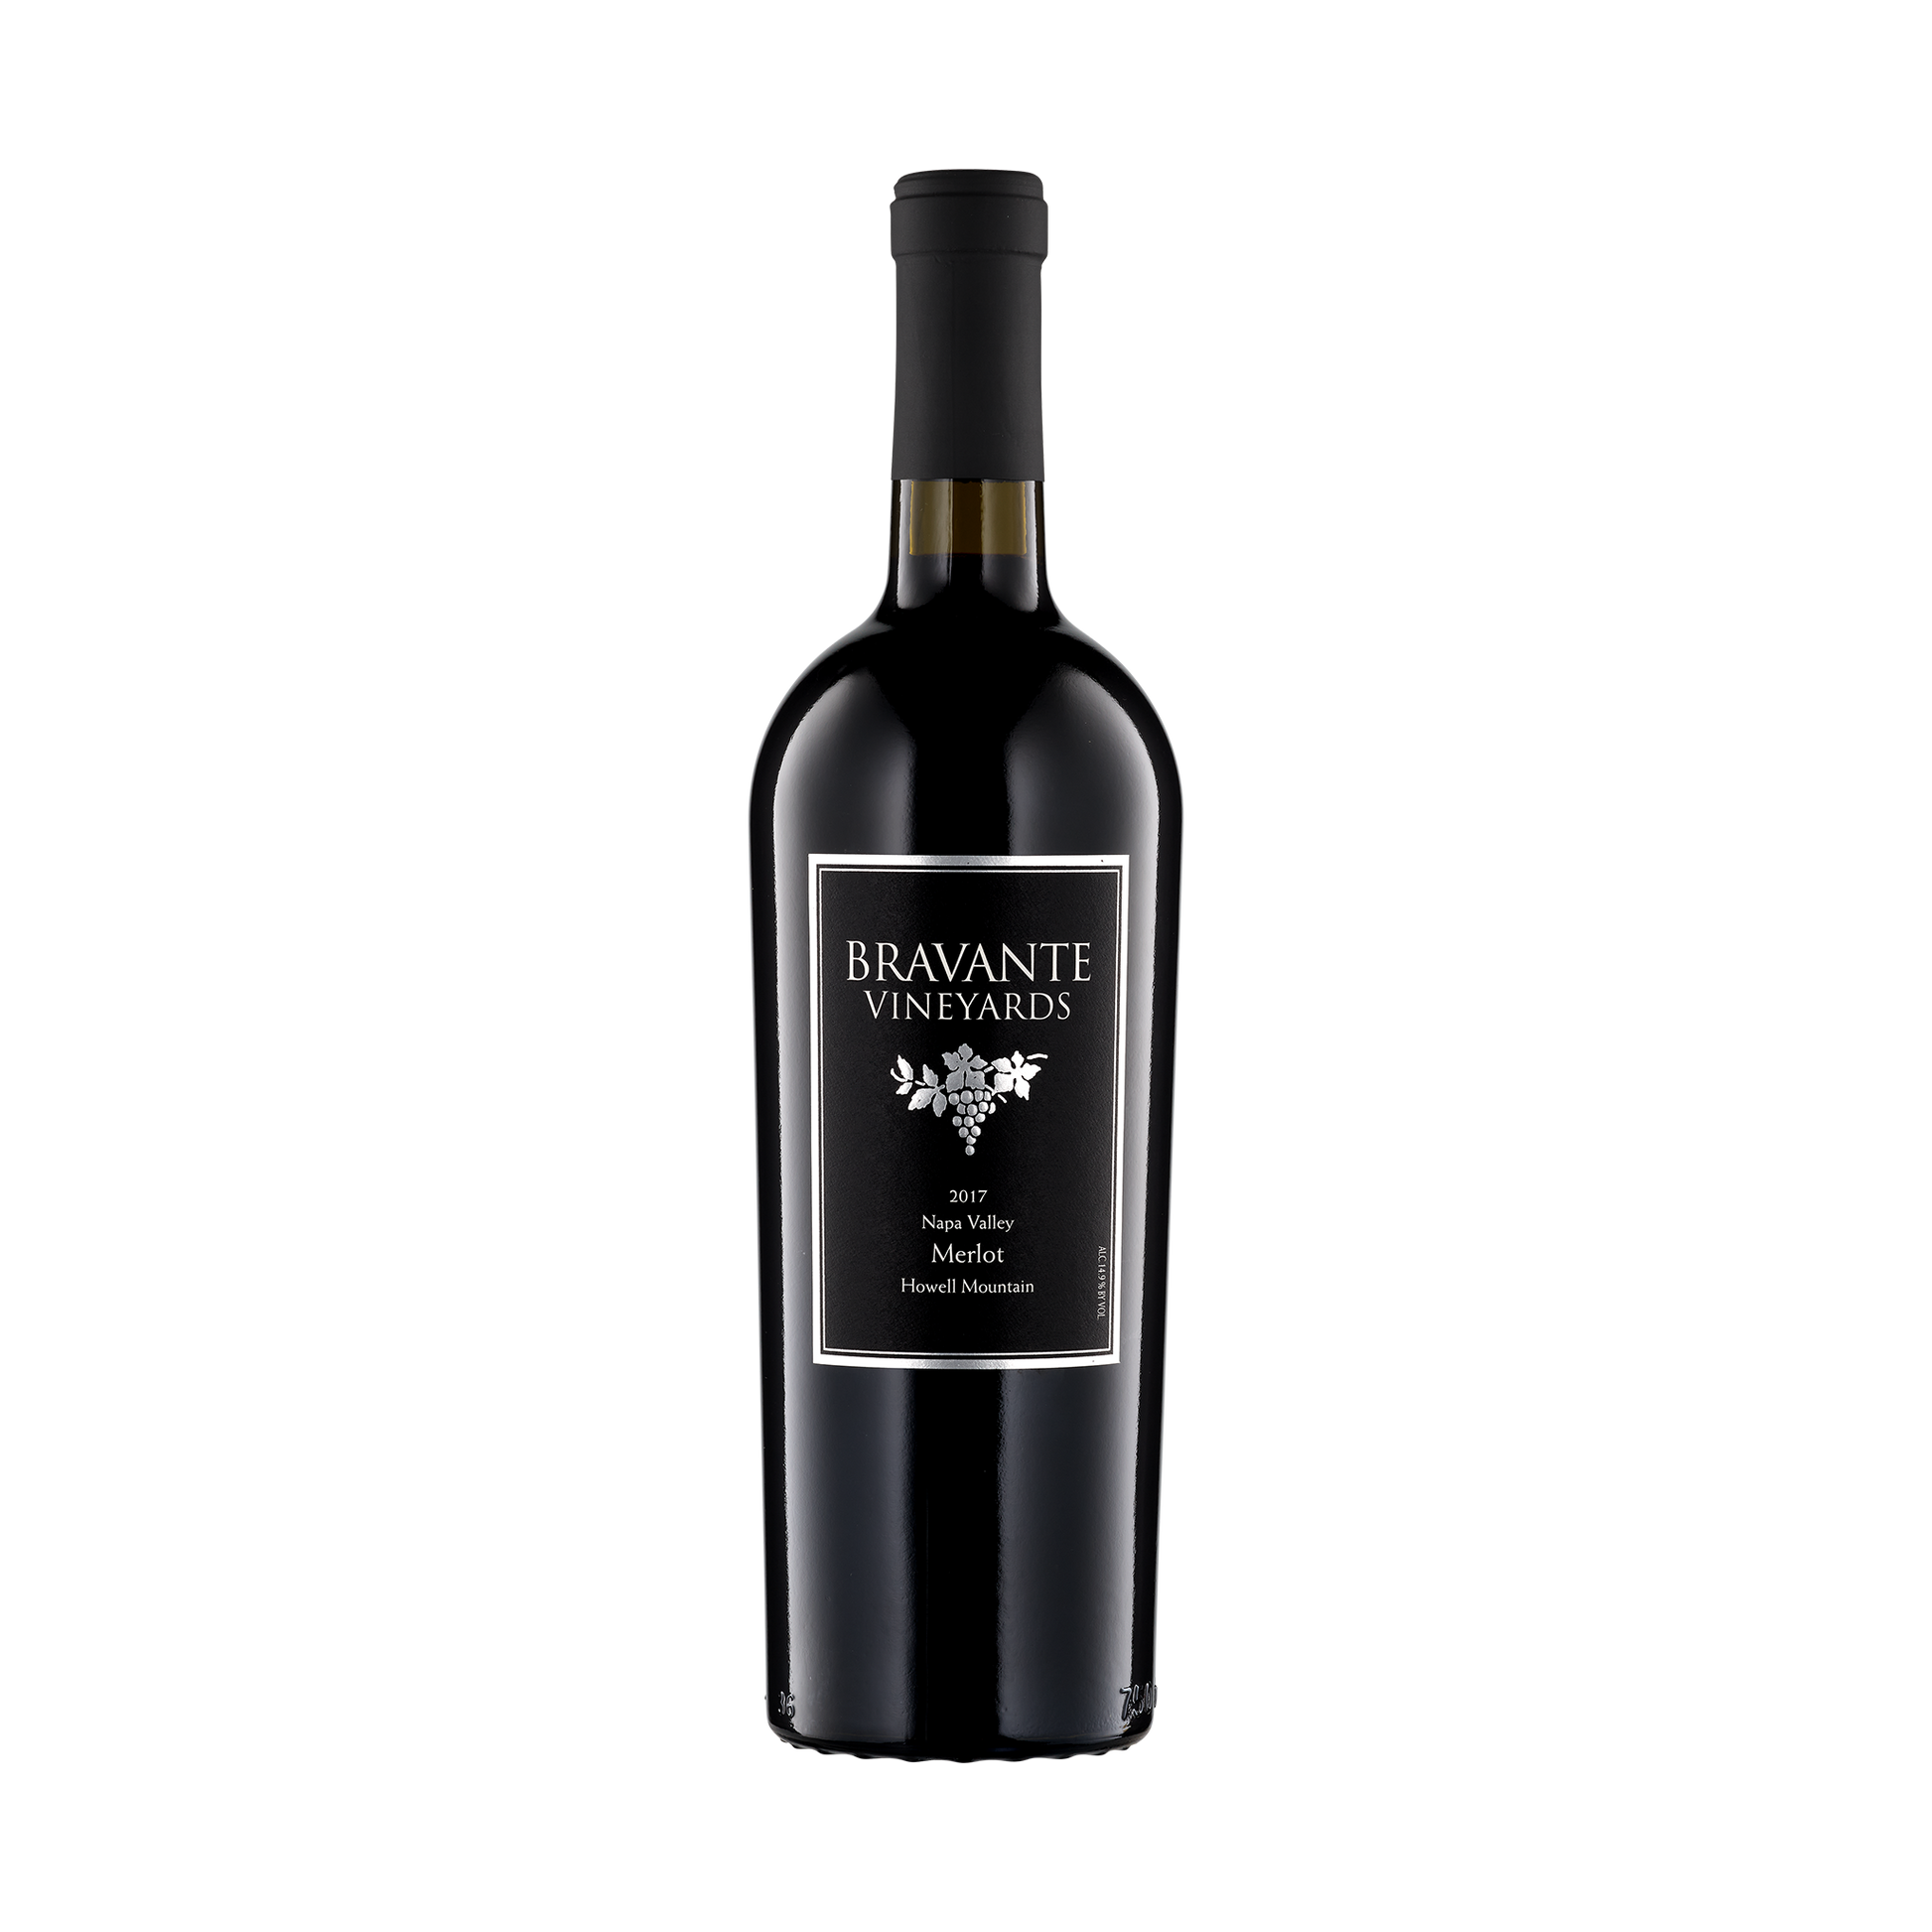 A bottle of Bravante Vineyards 2017 Merlot